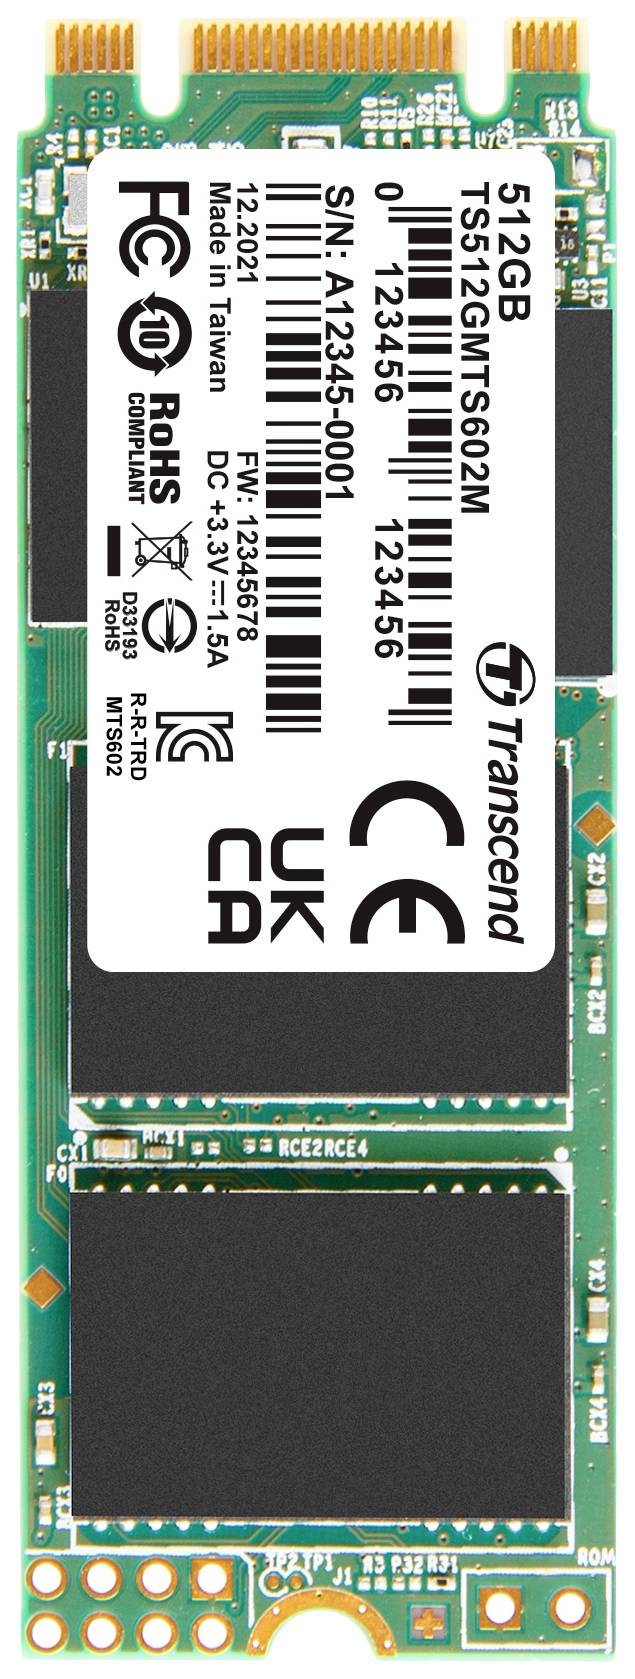 TRANSCEND 32GB SSD 6.35cm IDE MLC TS32GPSD330 